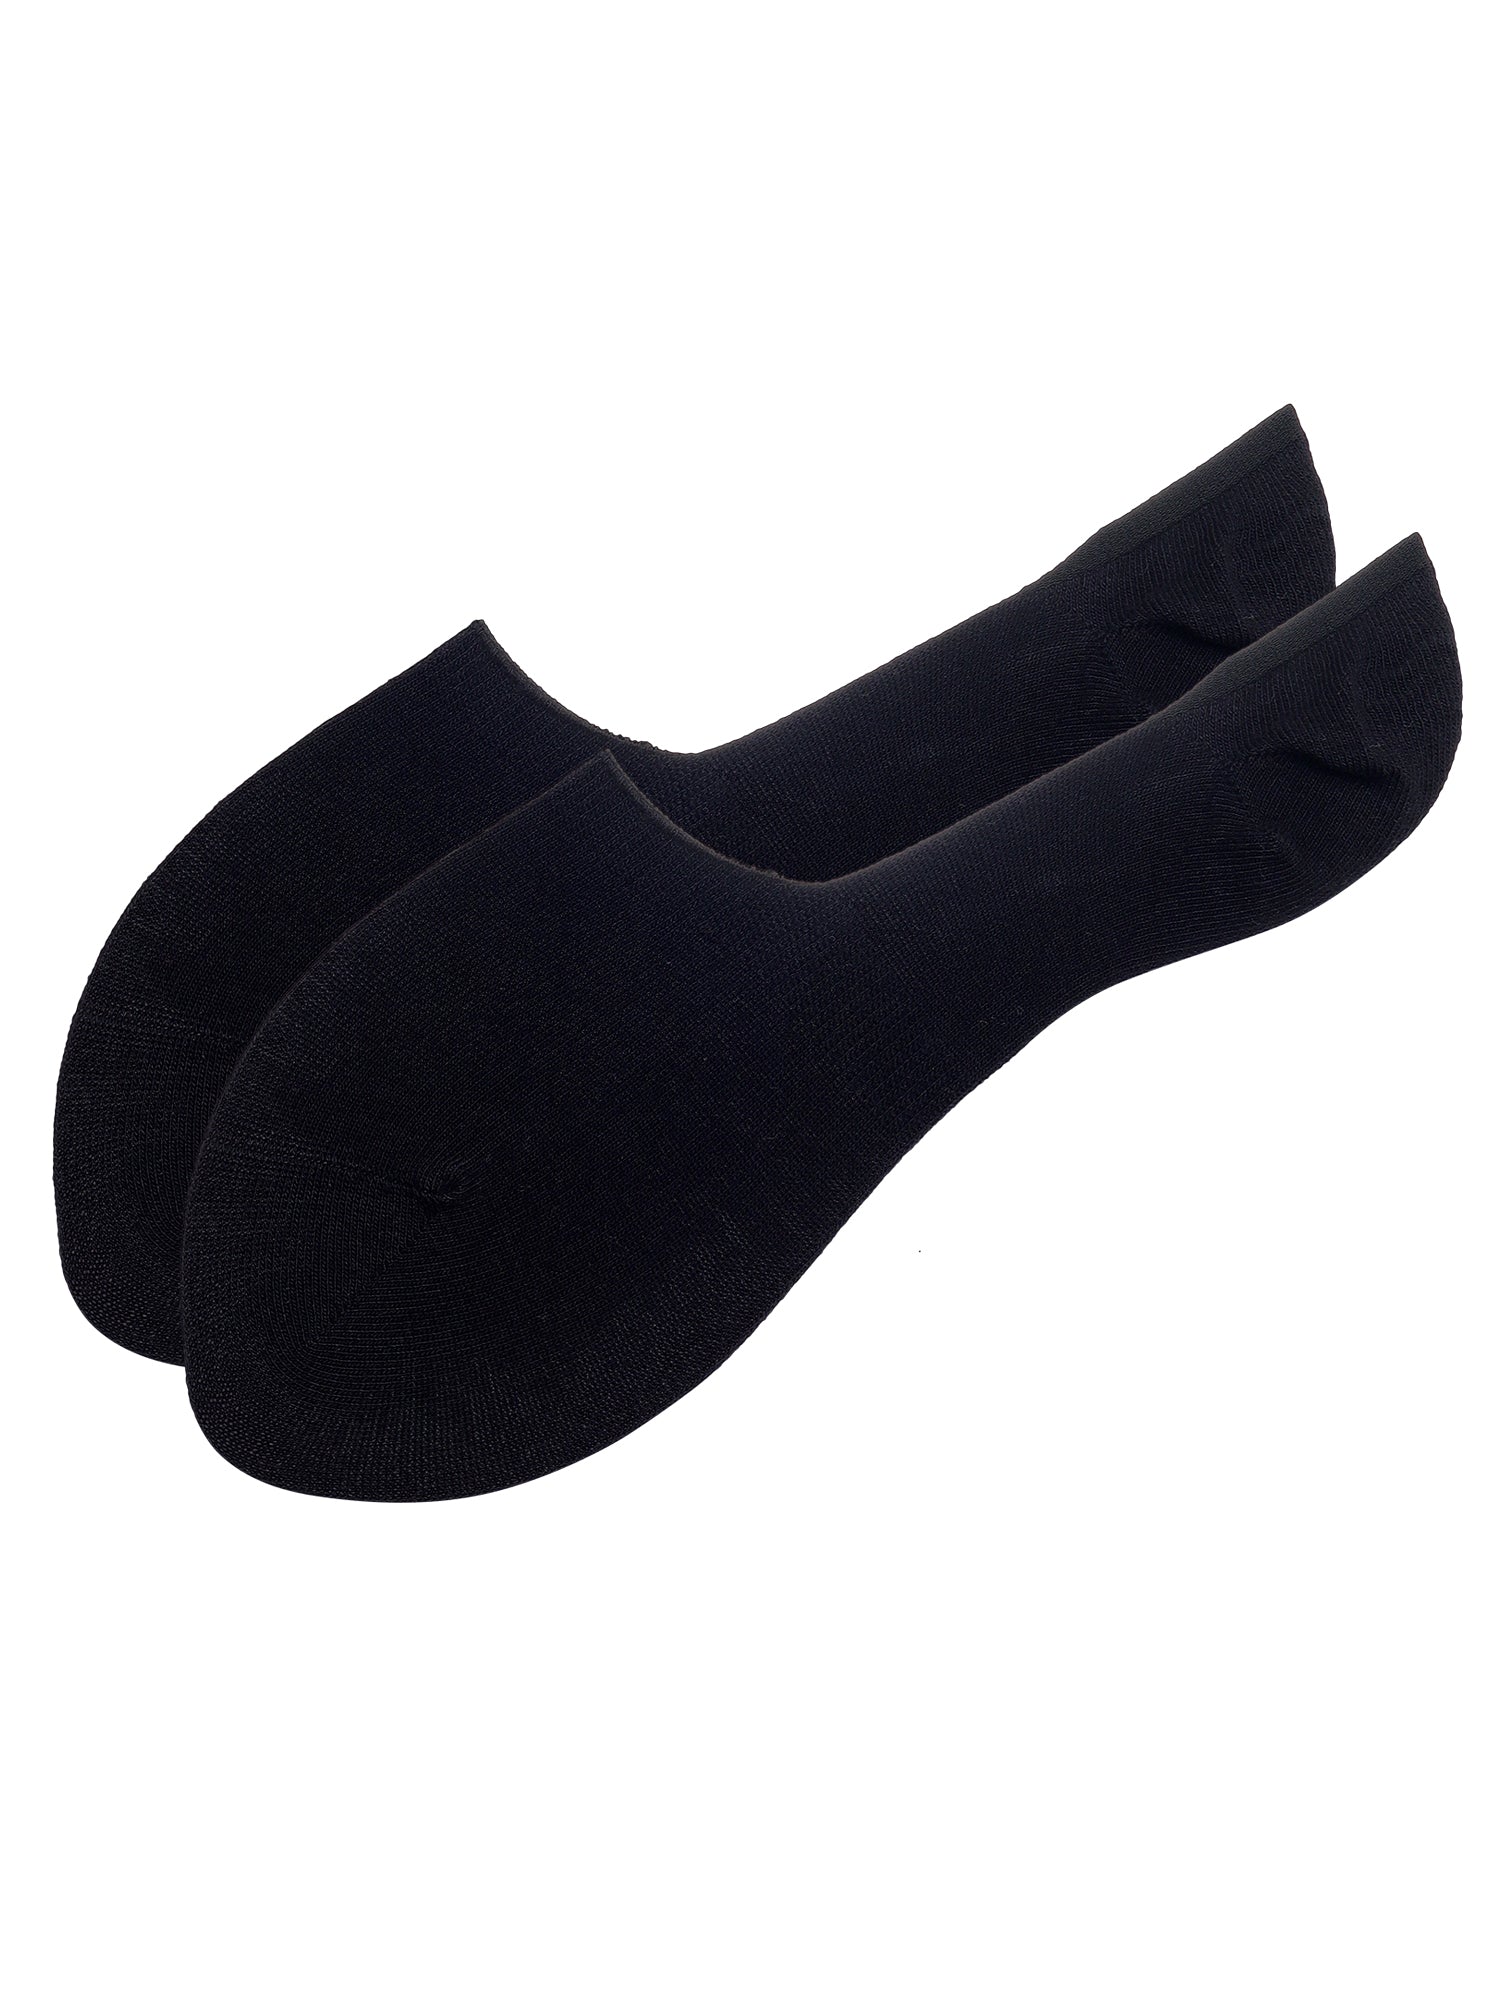 Black Solid Non-Slip No Show Loafer Socks For Men